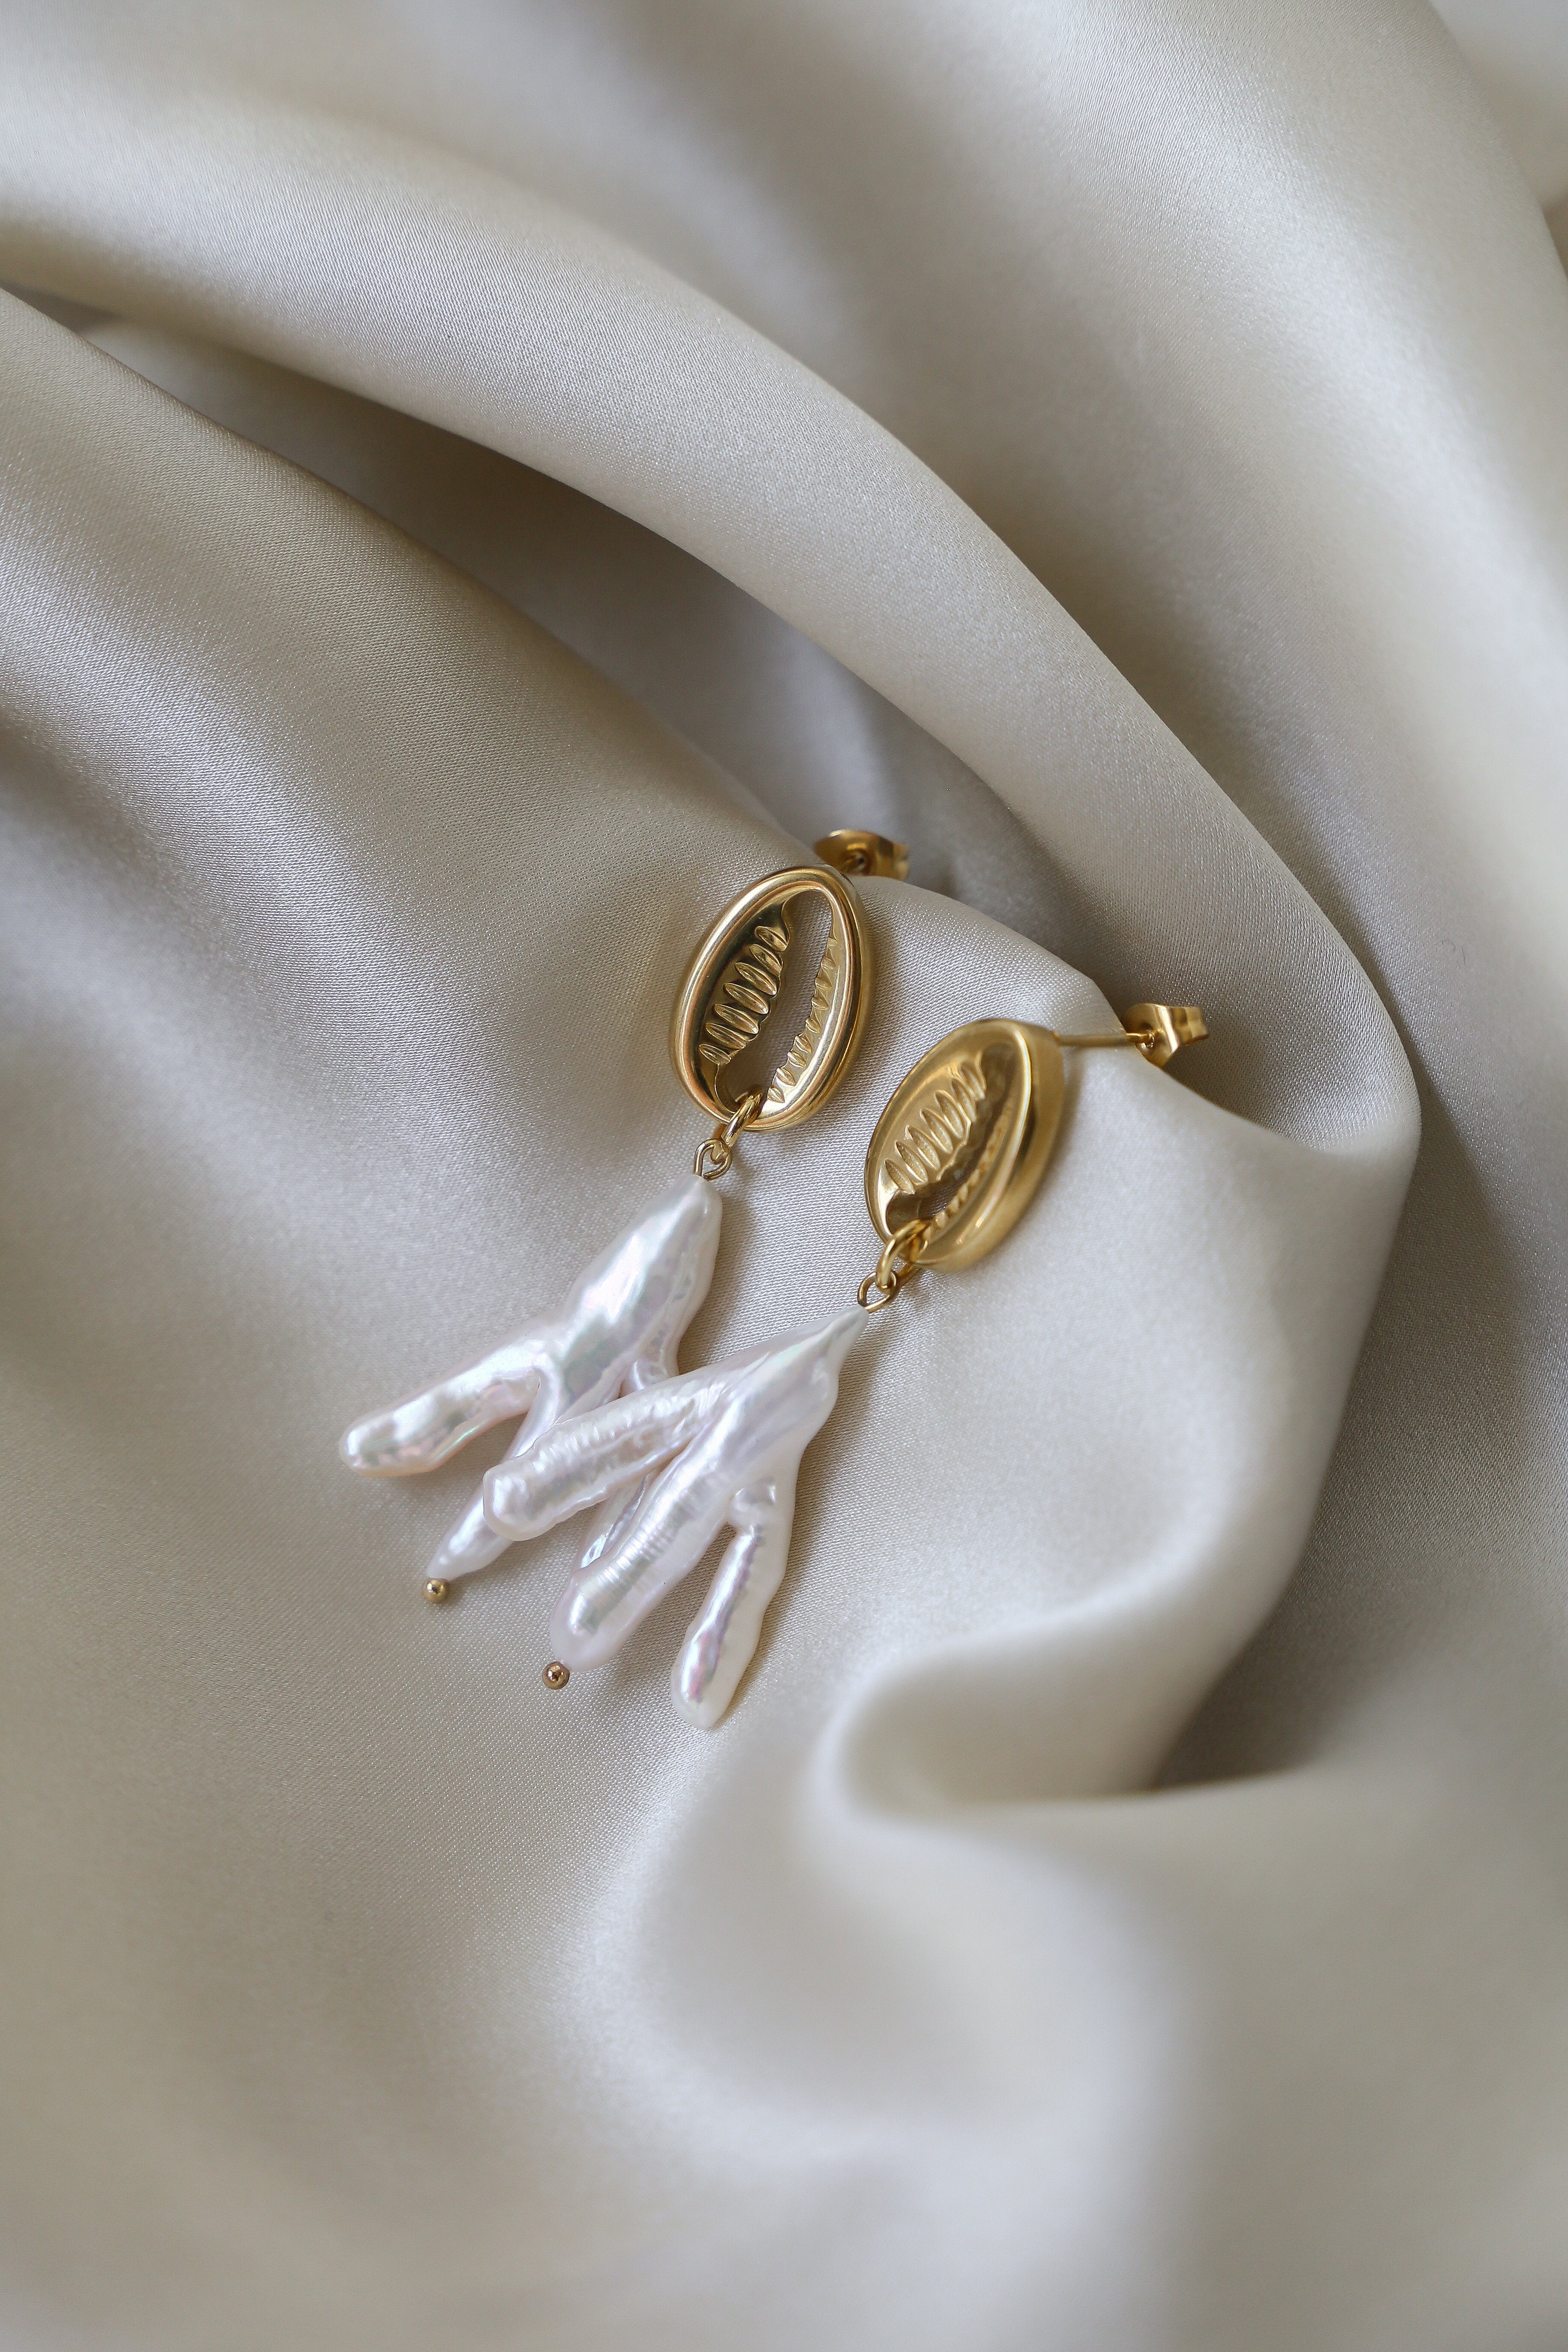 Febe Earrings - Boutique Minimaliste has waterproof, durable, elegant and vintage inspired jewelry